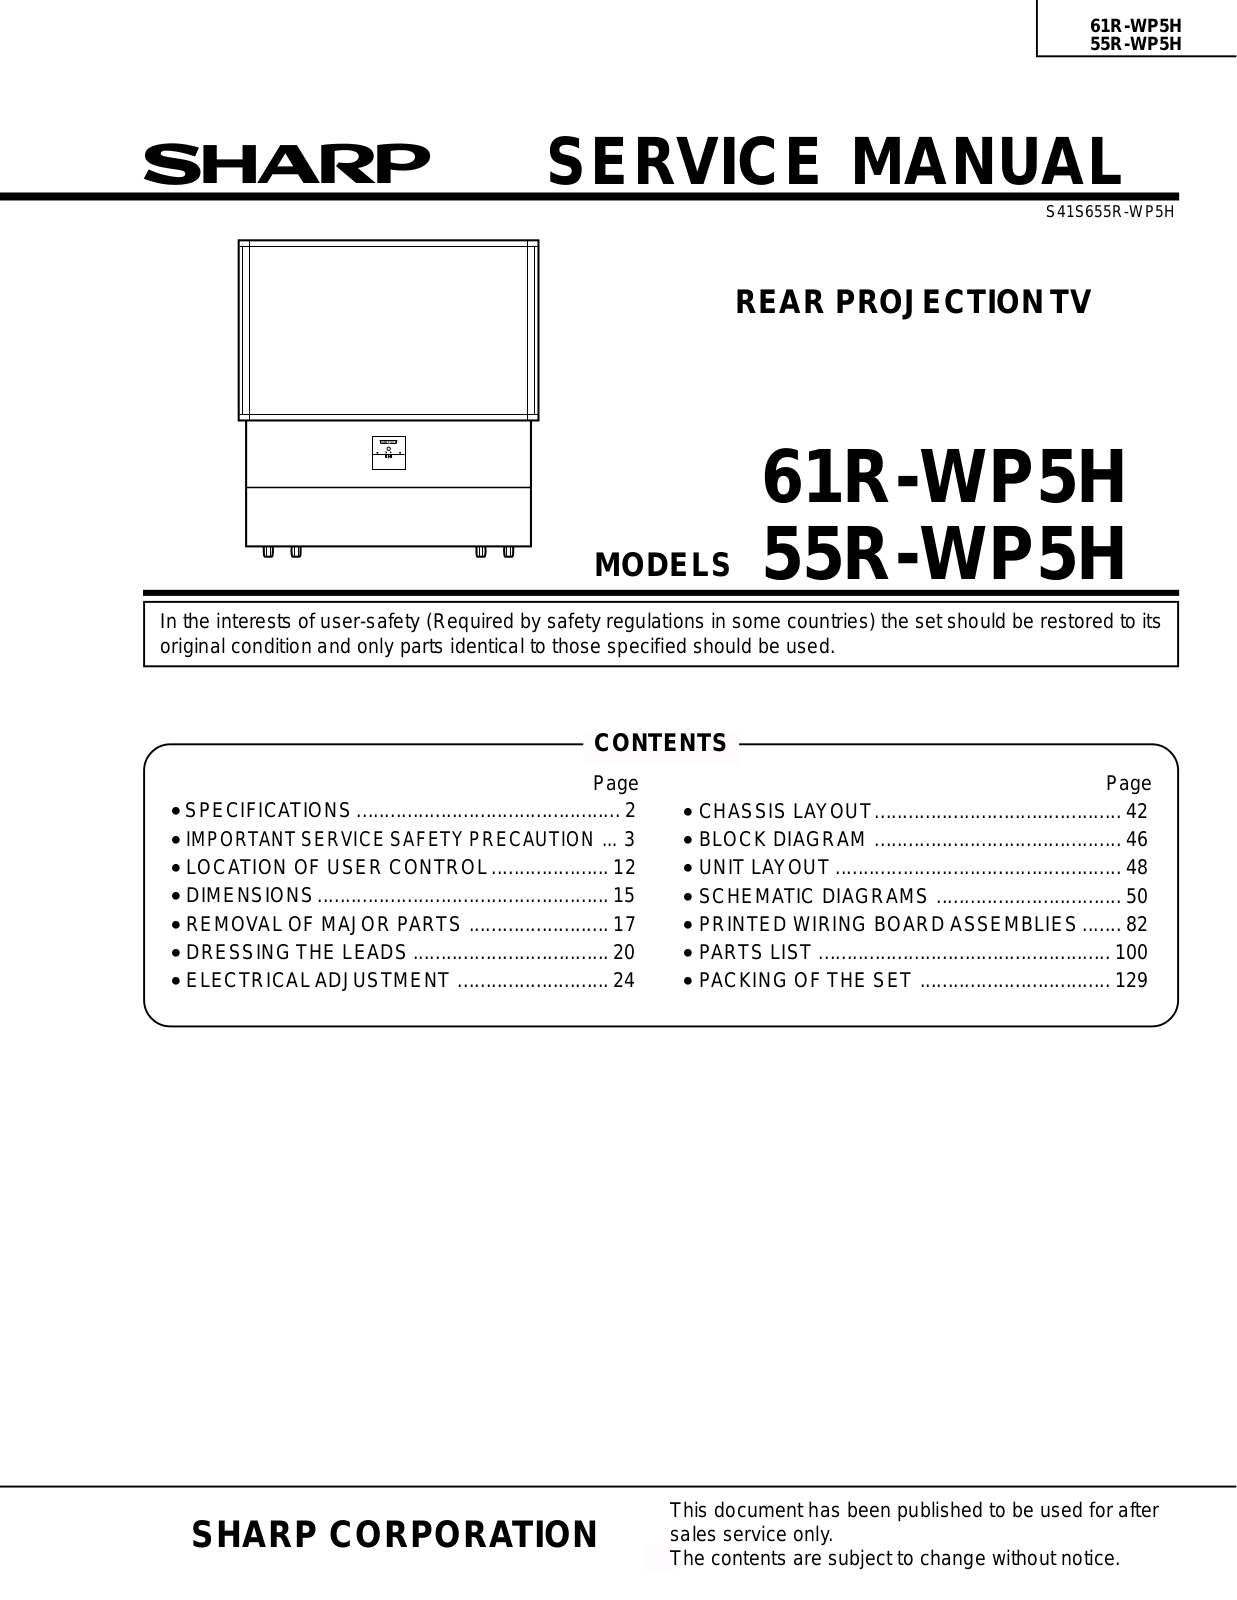 SHARP 61R-WP5H, 55R-WP5H Service Manual